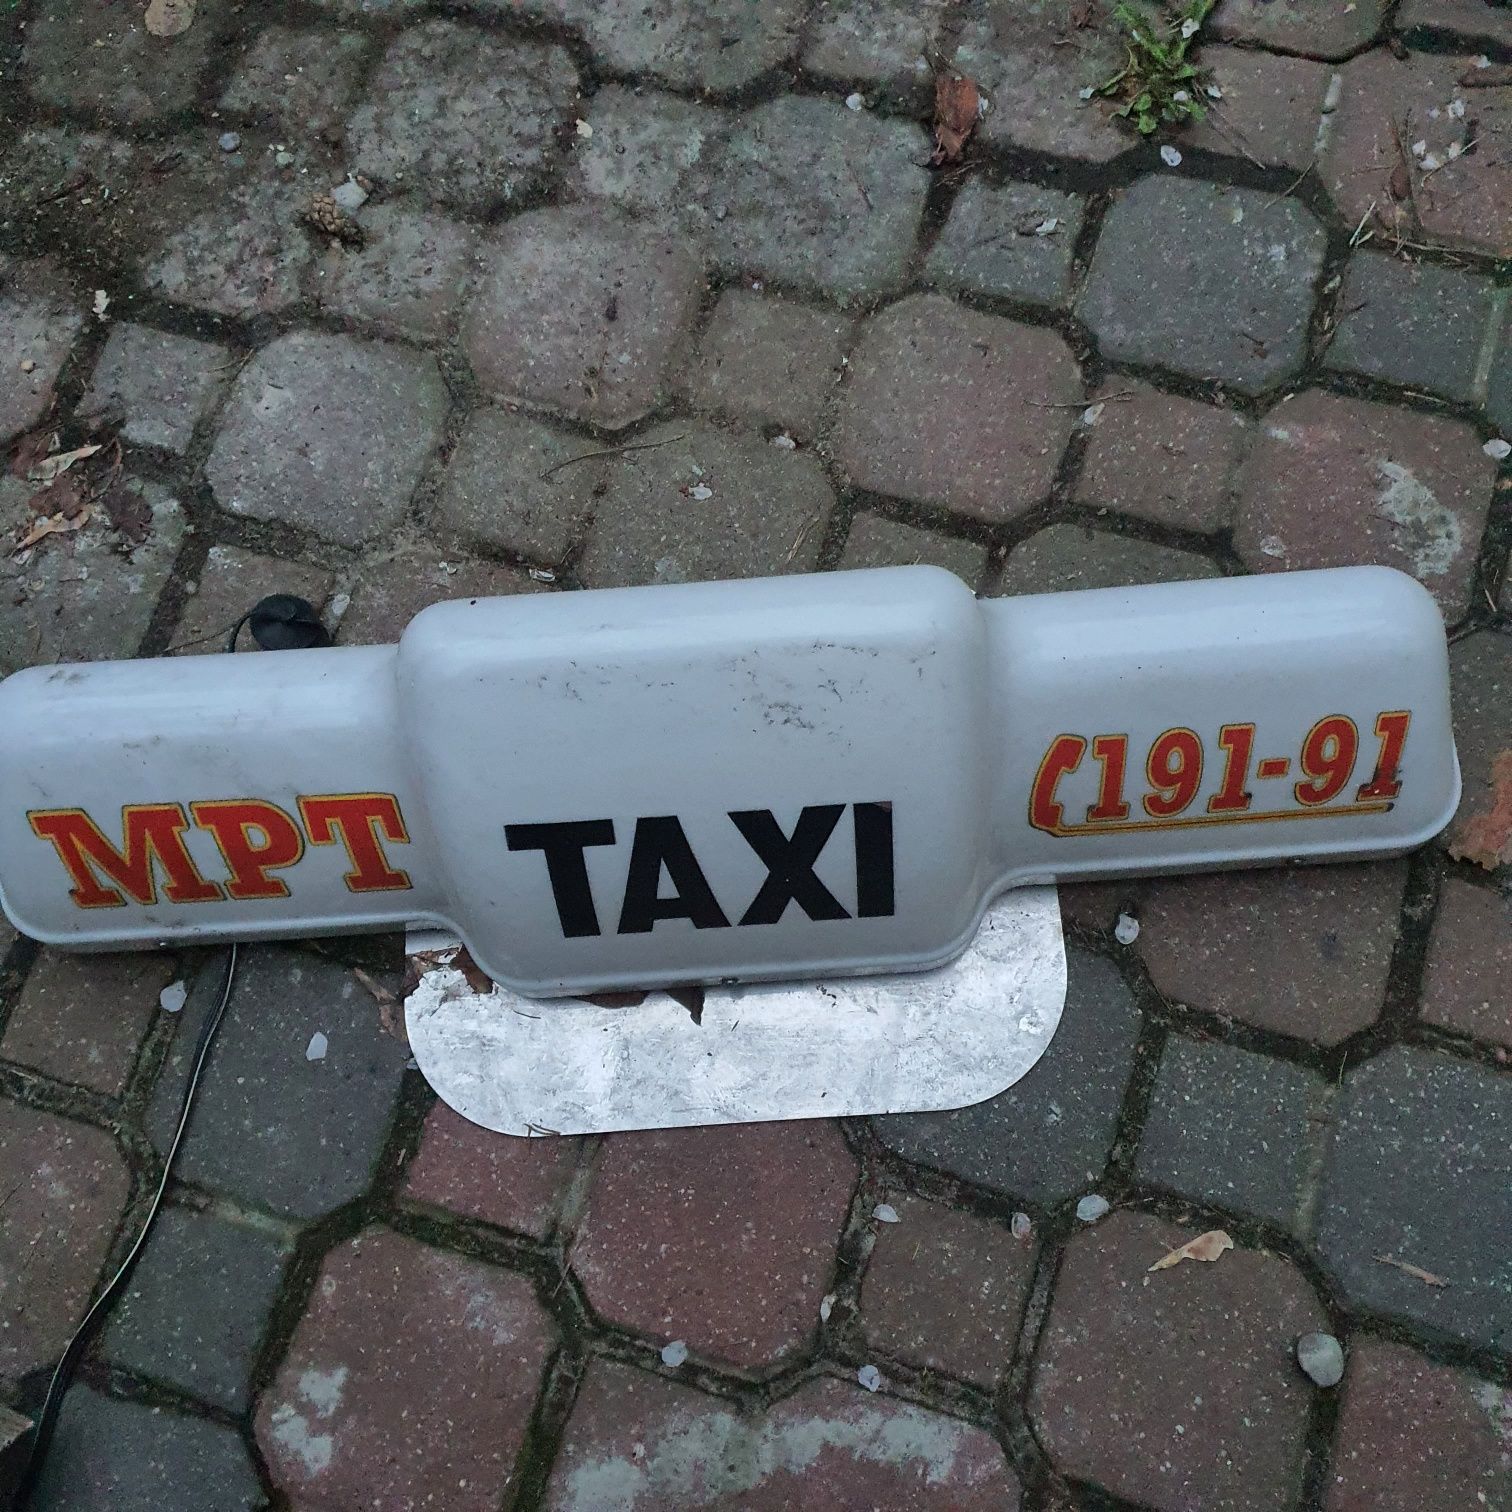 Kogut lampa taxi itaxi mpt taxi